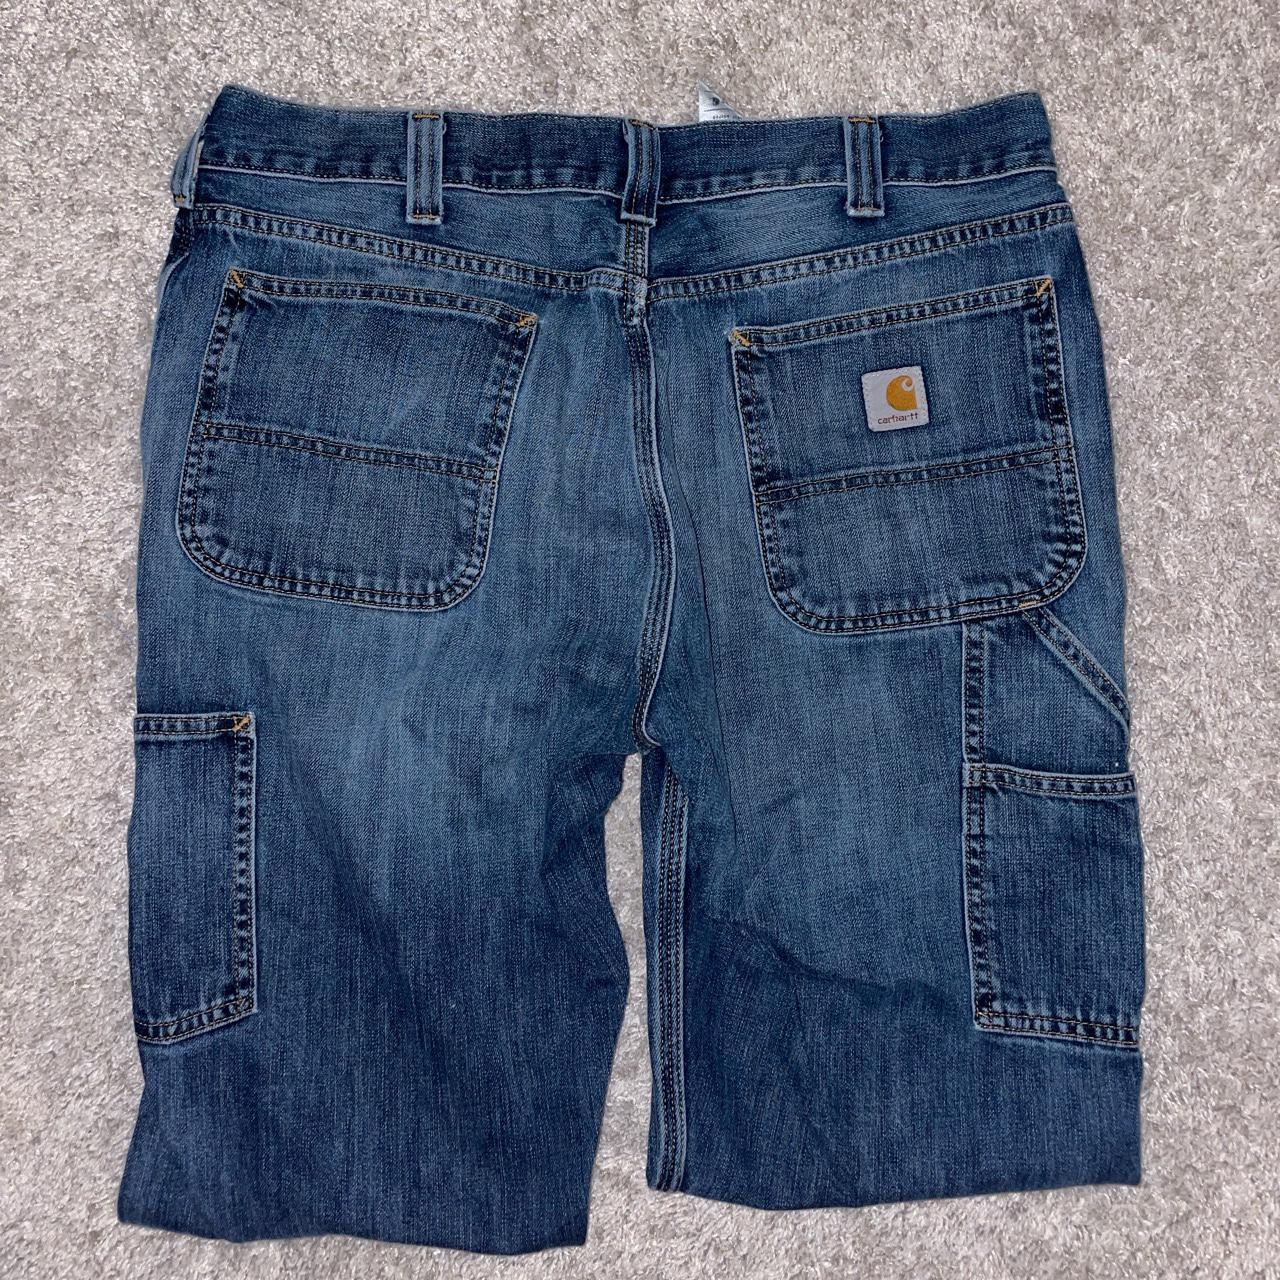 Carhartt carpenter jeans perfect fade 36x32 fits... - Depop